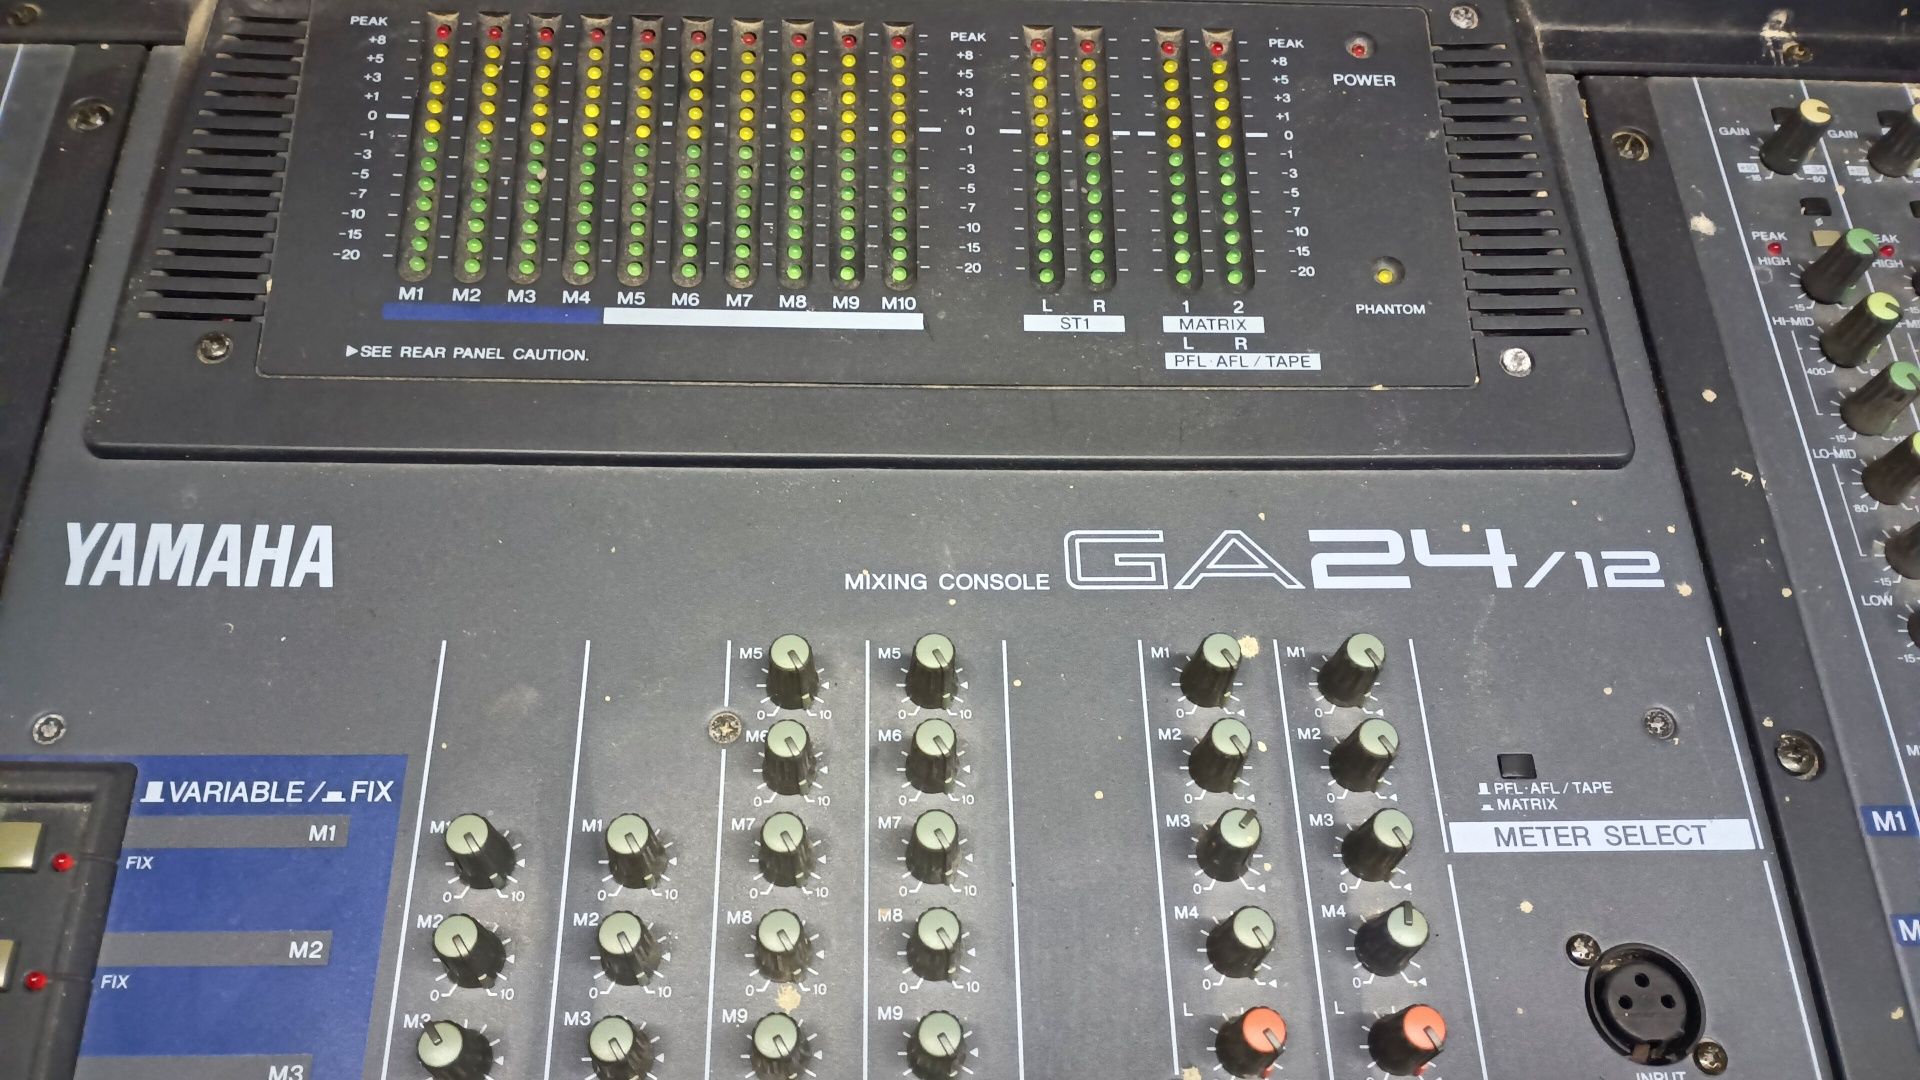 Yamaha GA 24/12 mixing console